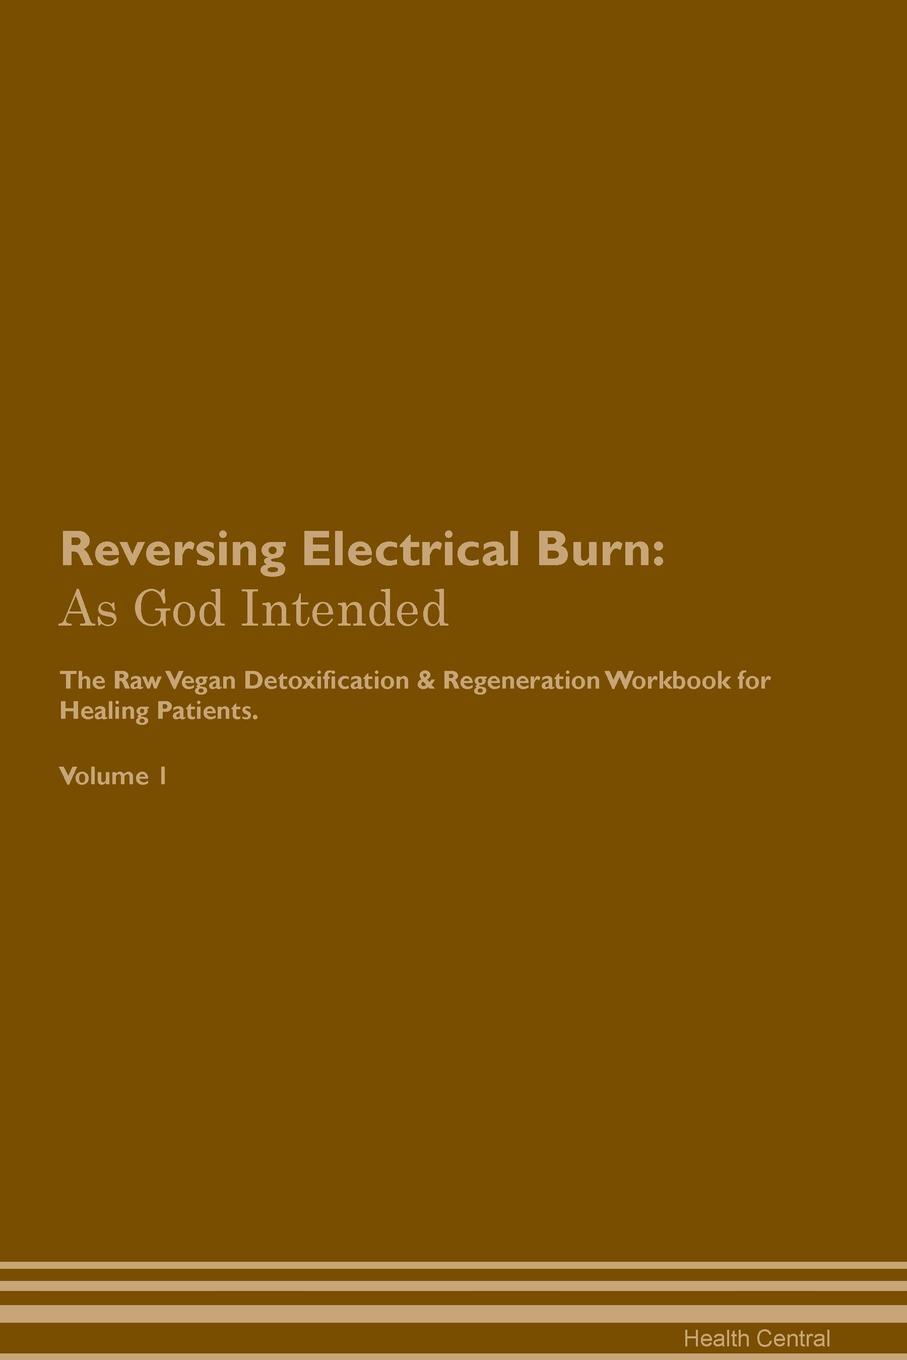 фото Reversing Electrical Burn. As God Intended The Raw Vegan Plant-Based Detoxification & Regeneration Workbook for Healing Patients. Volume 1